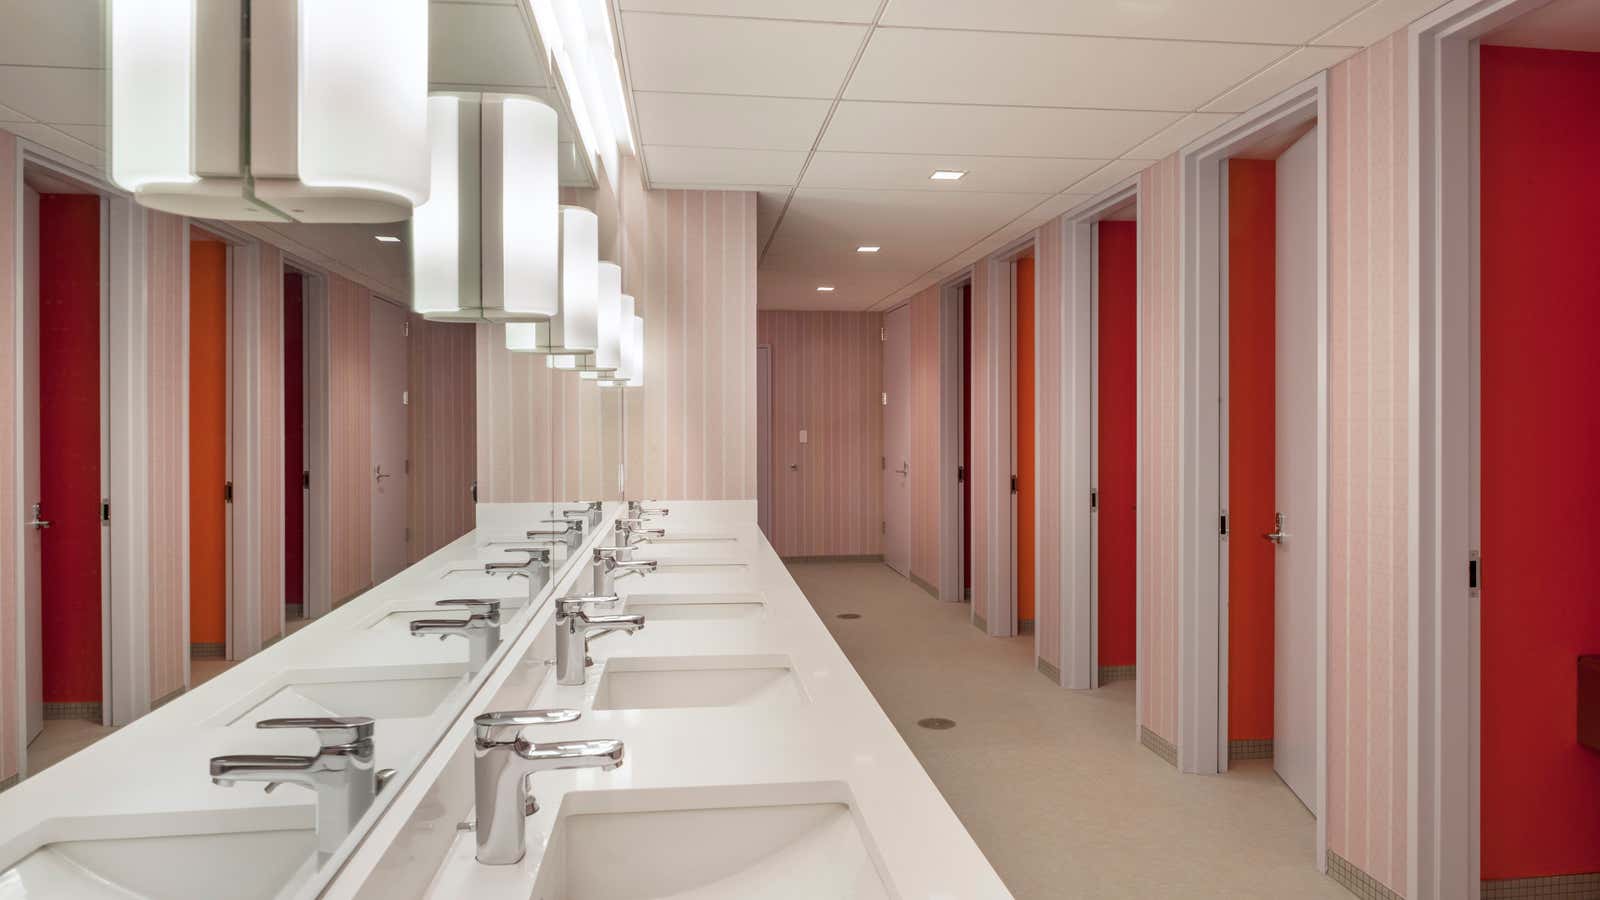 How to design transgender-friendly bathrooms that make people of all genders feel safe image